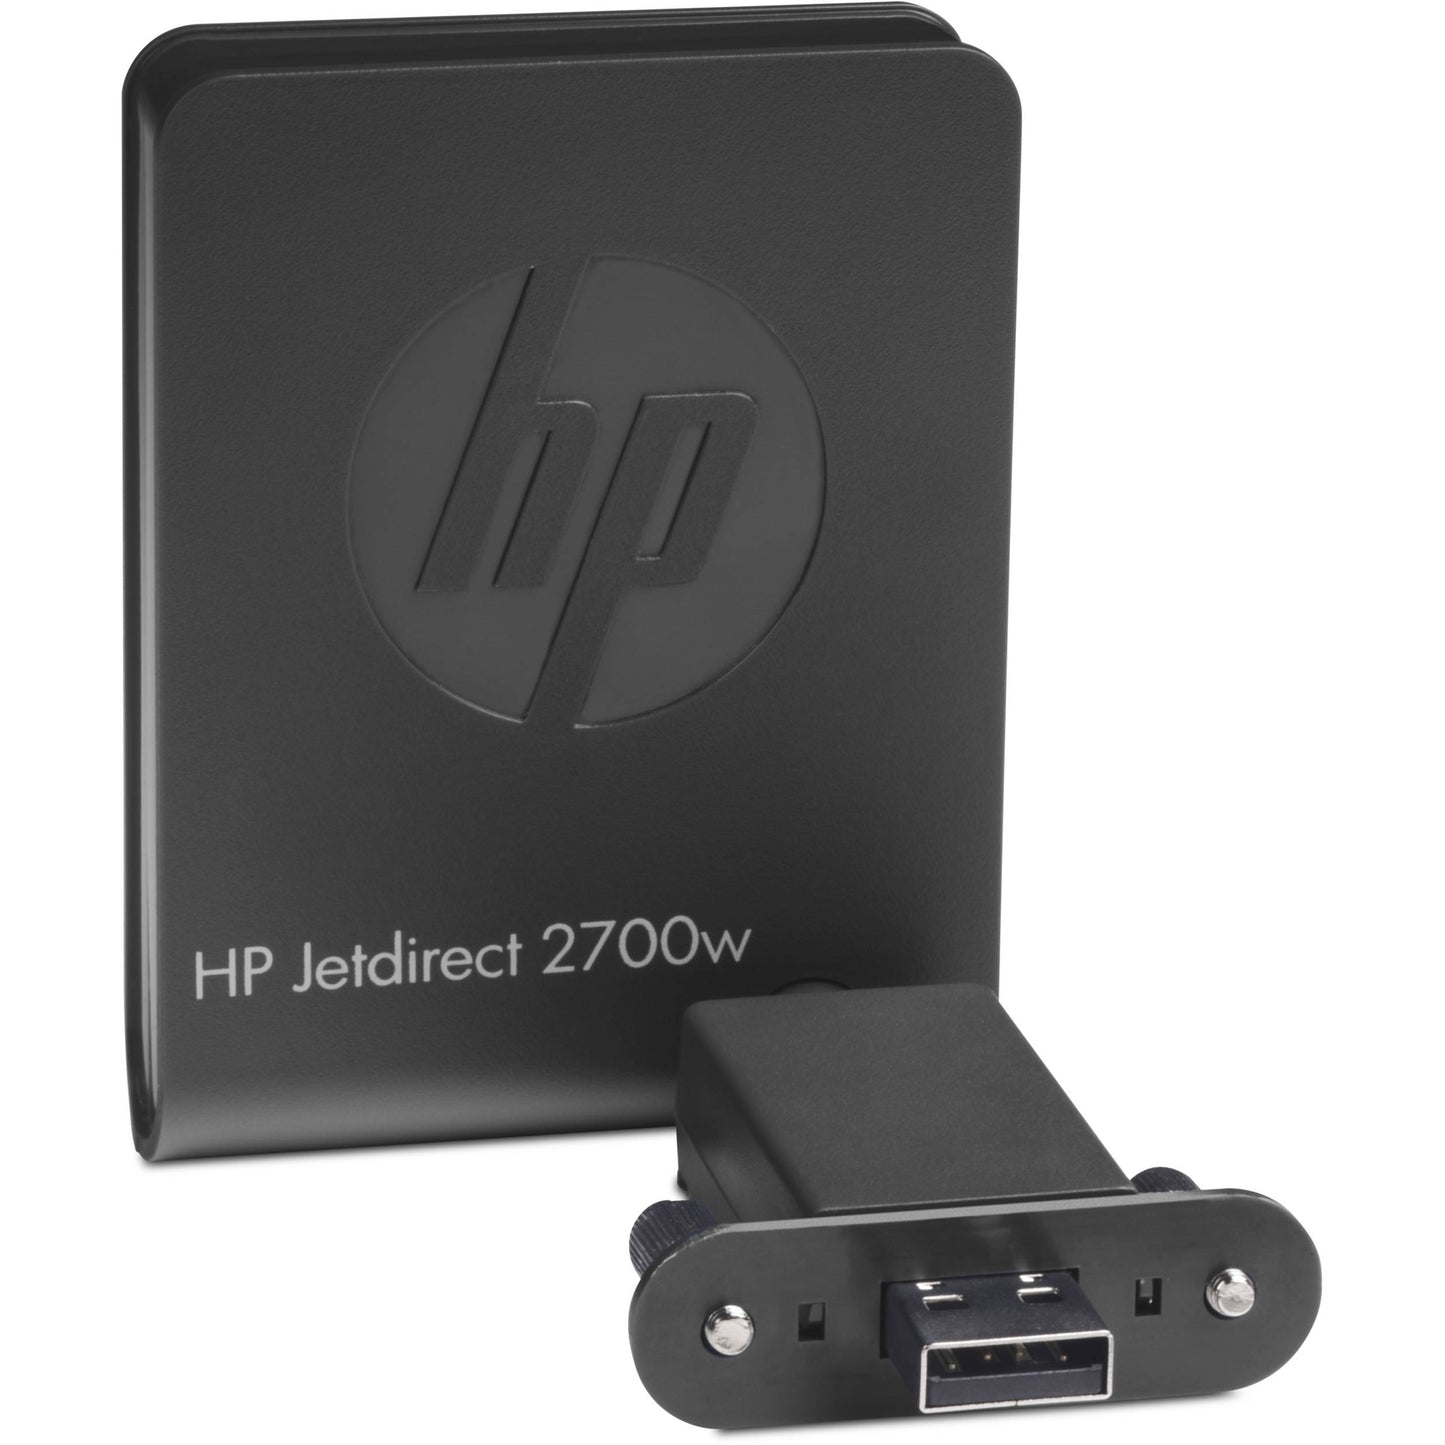 HP J8026A Jetdirect 2700w USB Wireless Print Server, WiFi, IEEE 802.11n, USB